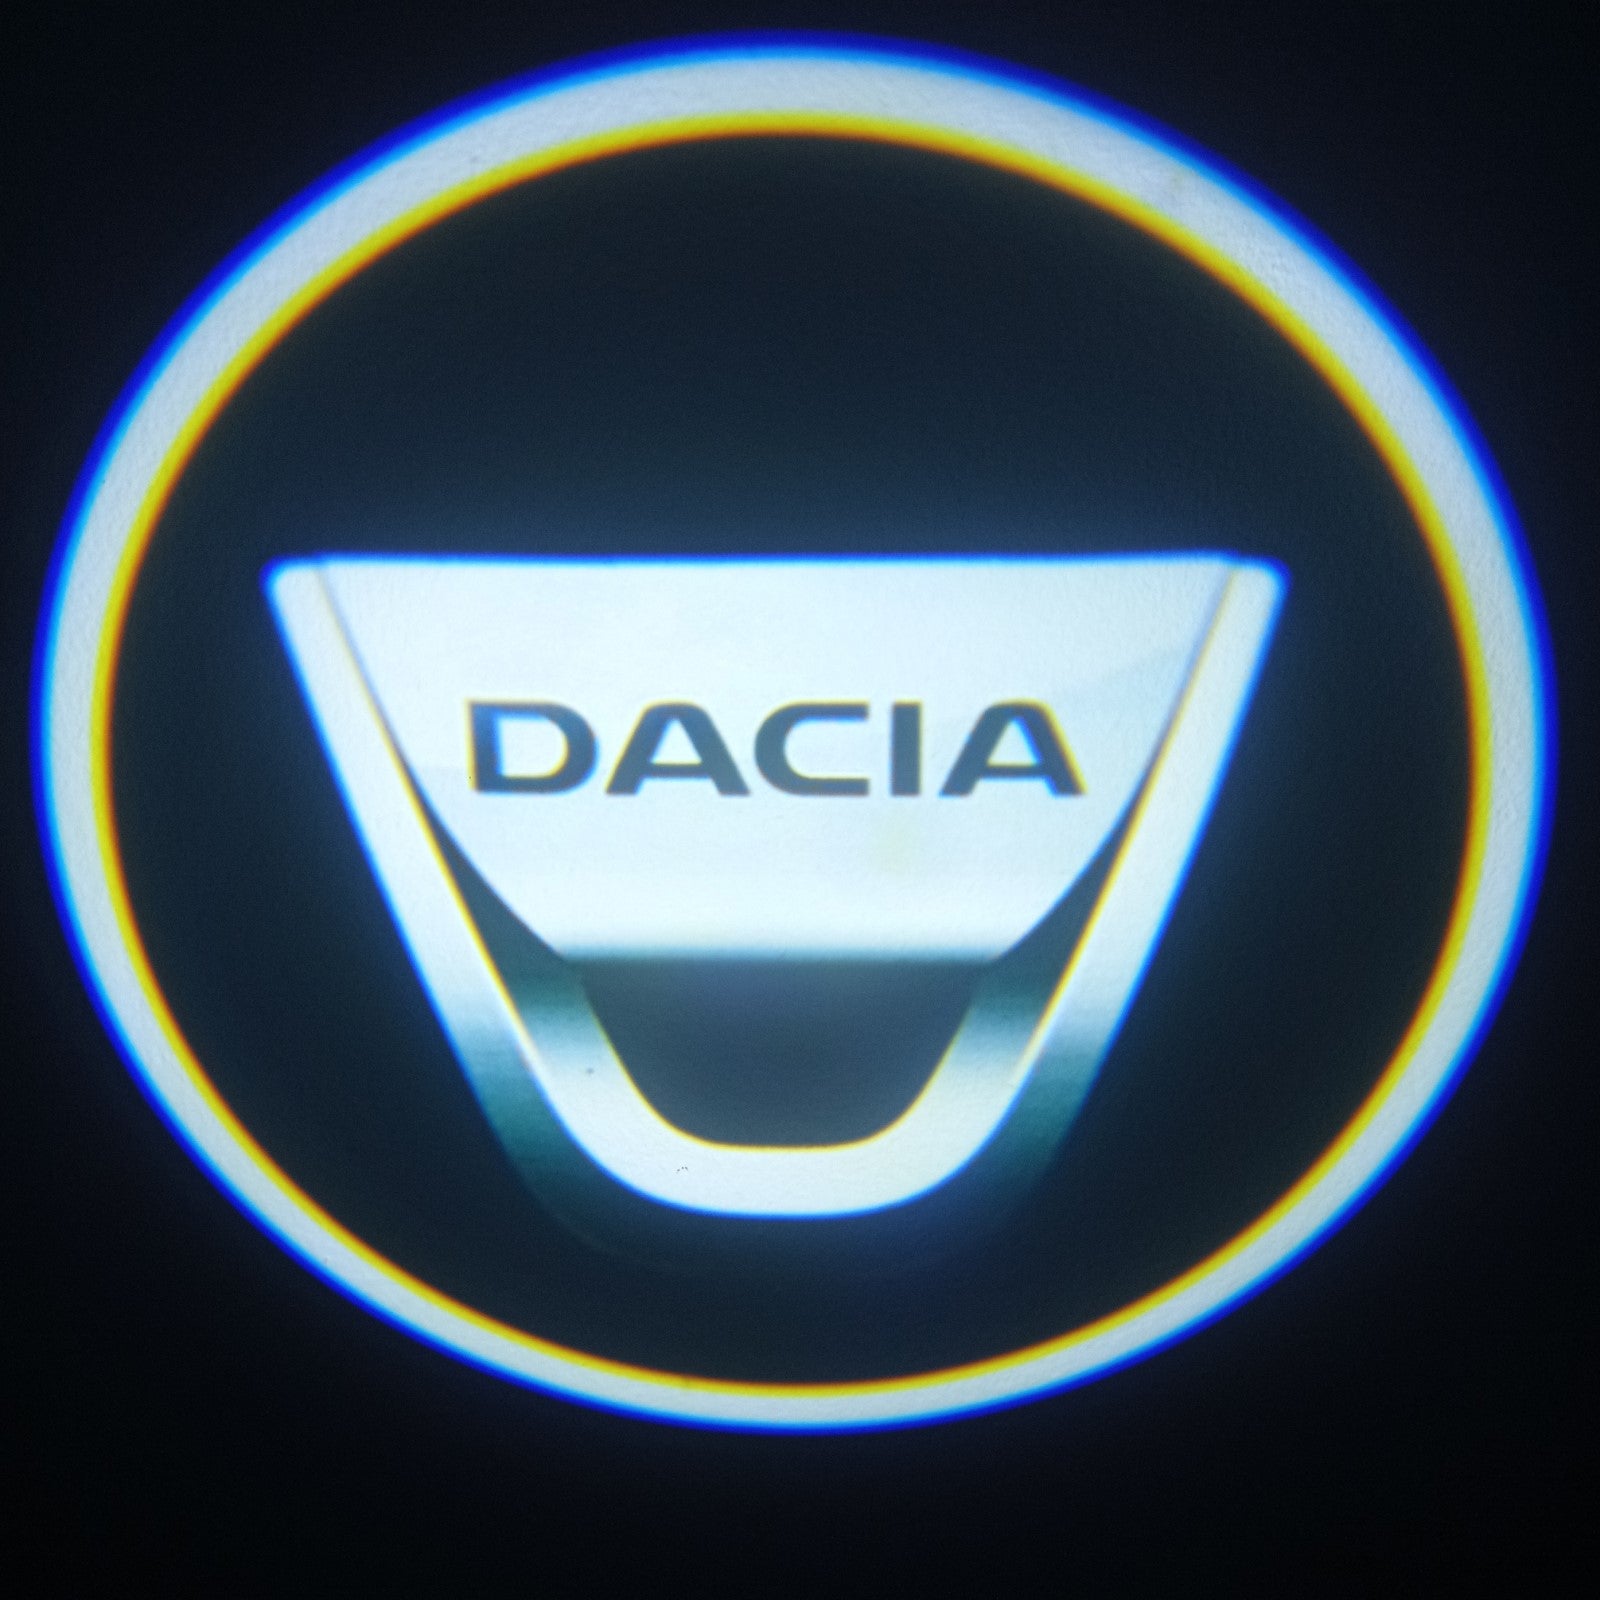 Luzes Cortesia com Logotipo marca Dacia